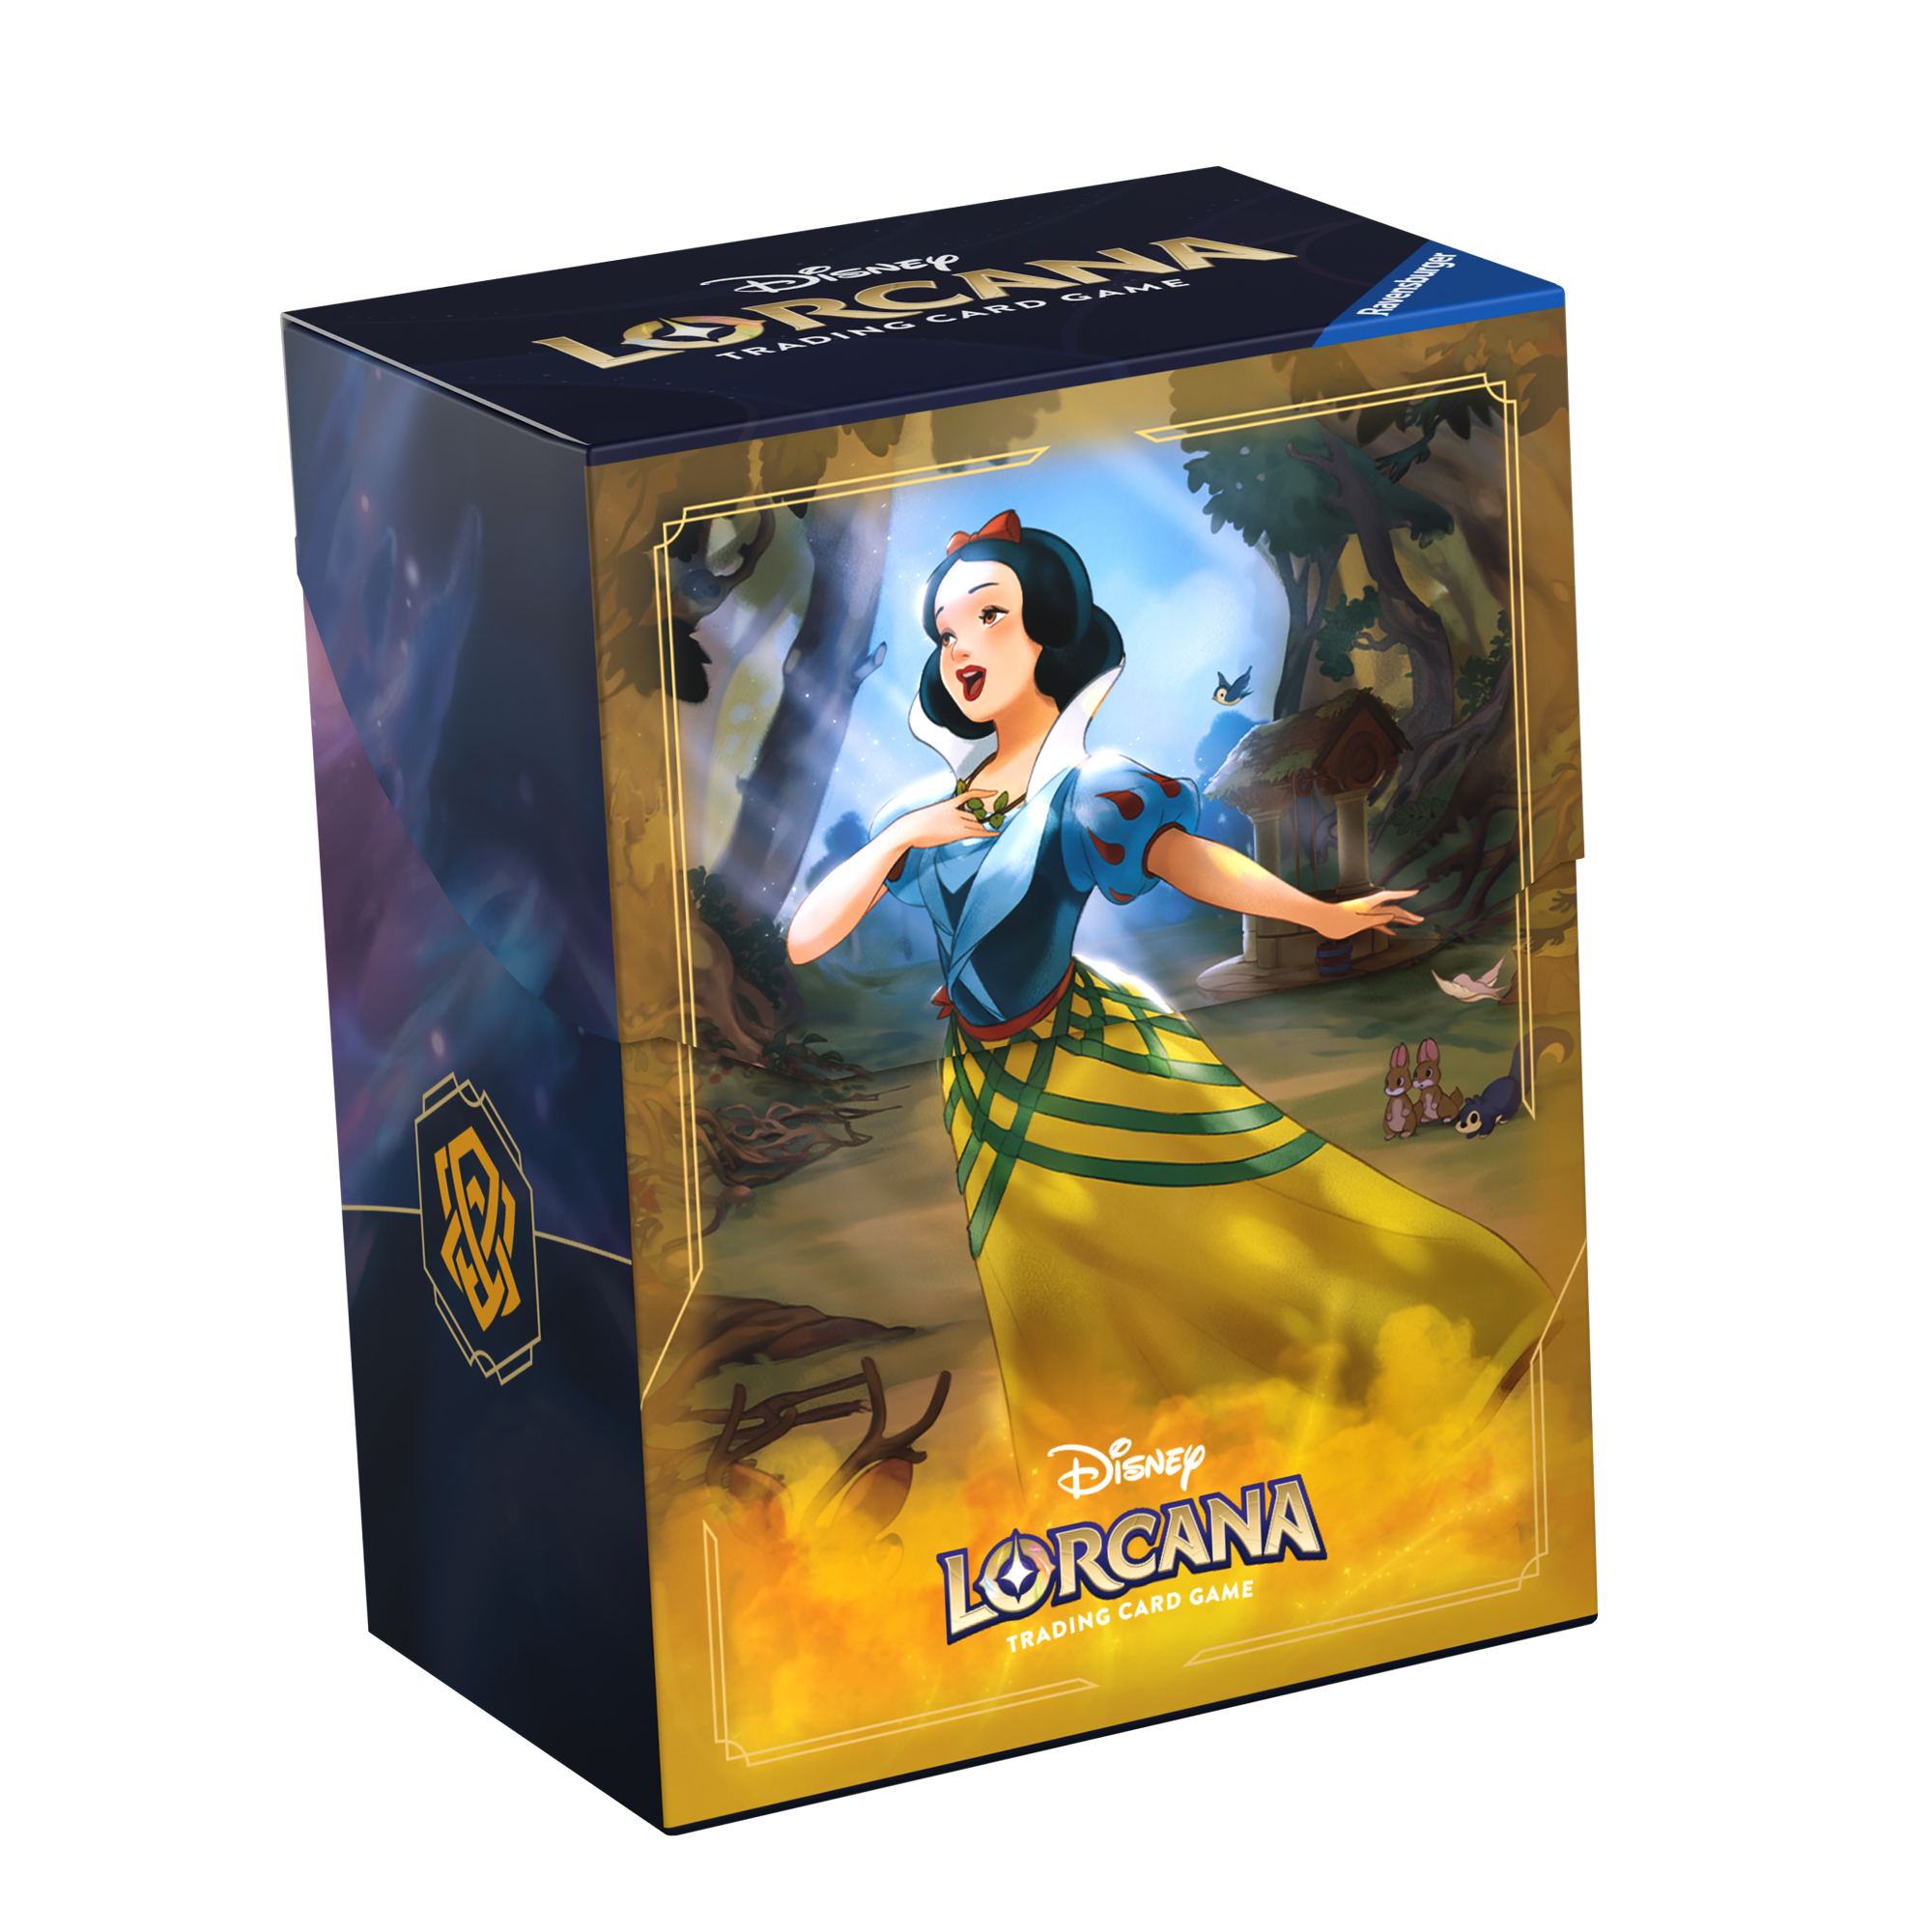 Disney Lorcana - Deckbox Snow White